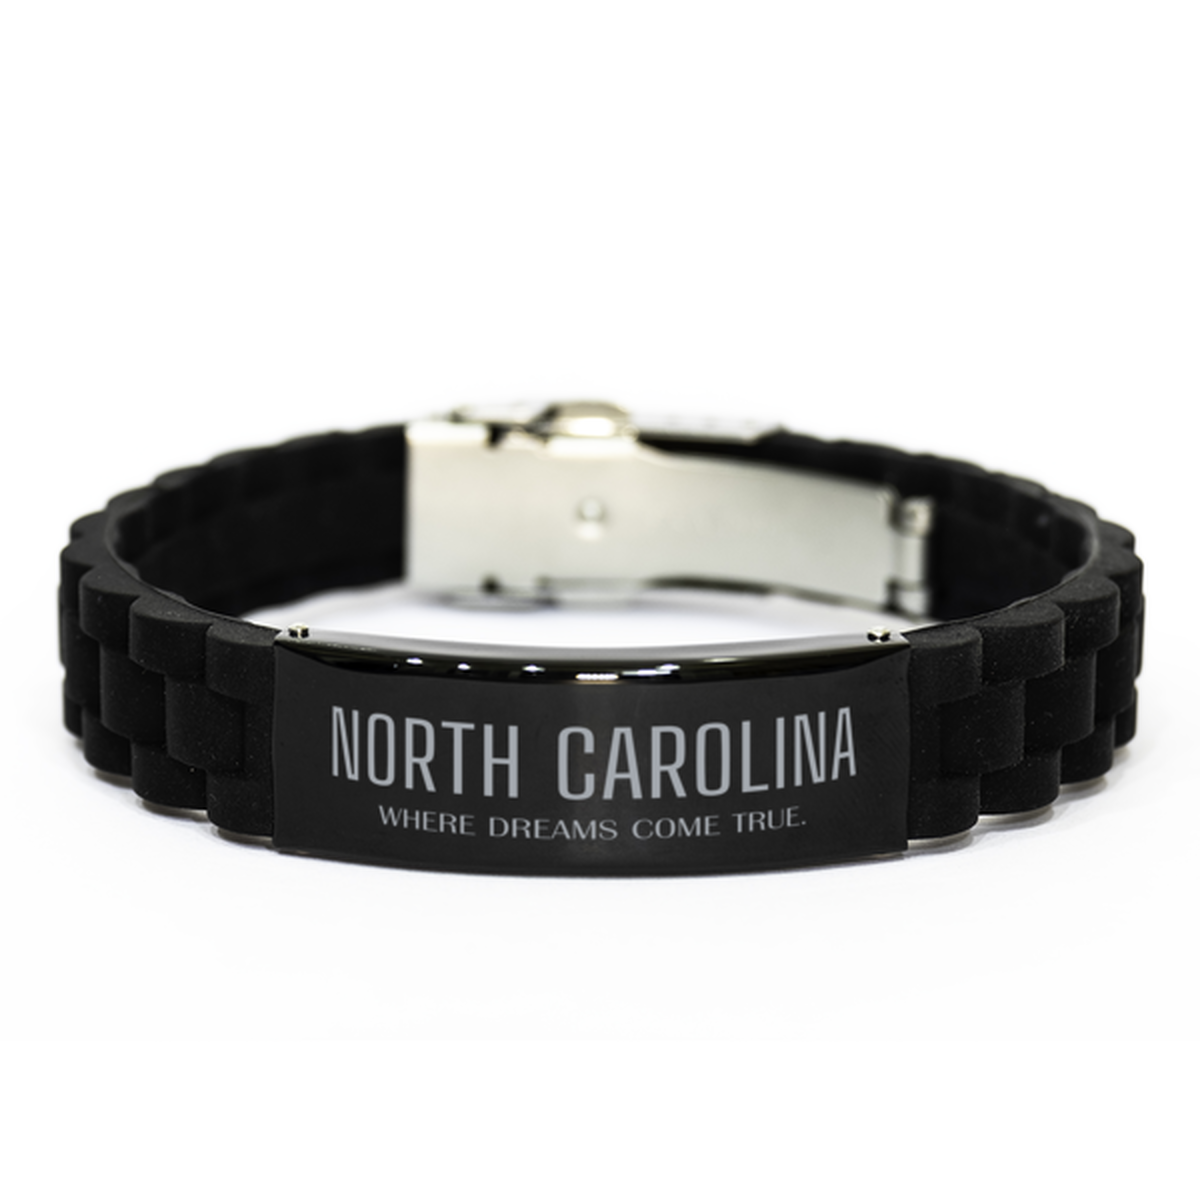 Love North Carolina State Black Glidelock Clasp Bracelet, North Carolina Where dreams come true, Birthday Inspirational Gifts For North Carolina Men, Women, Friends